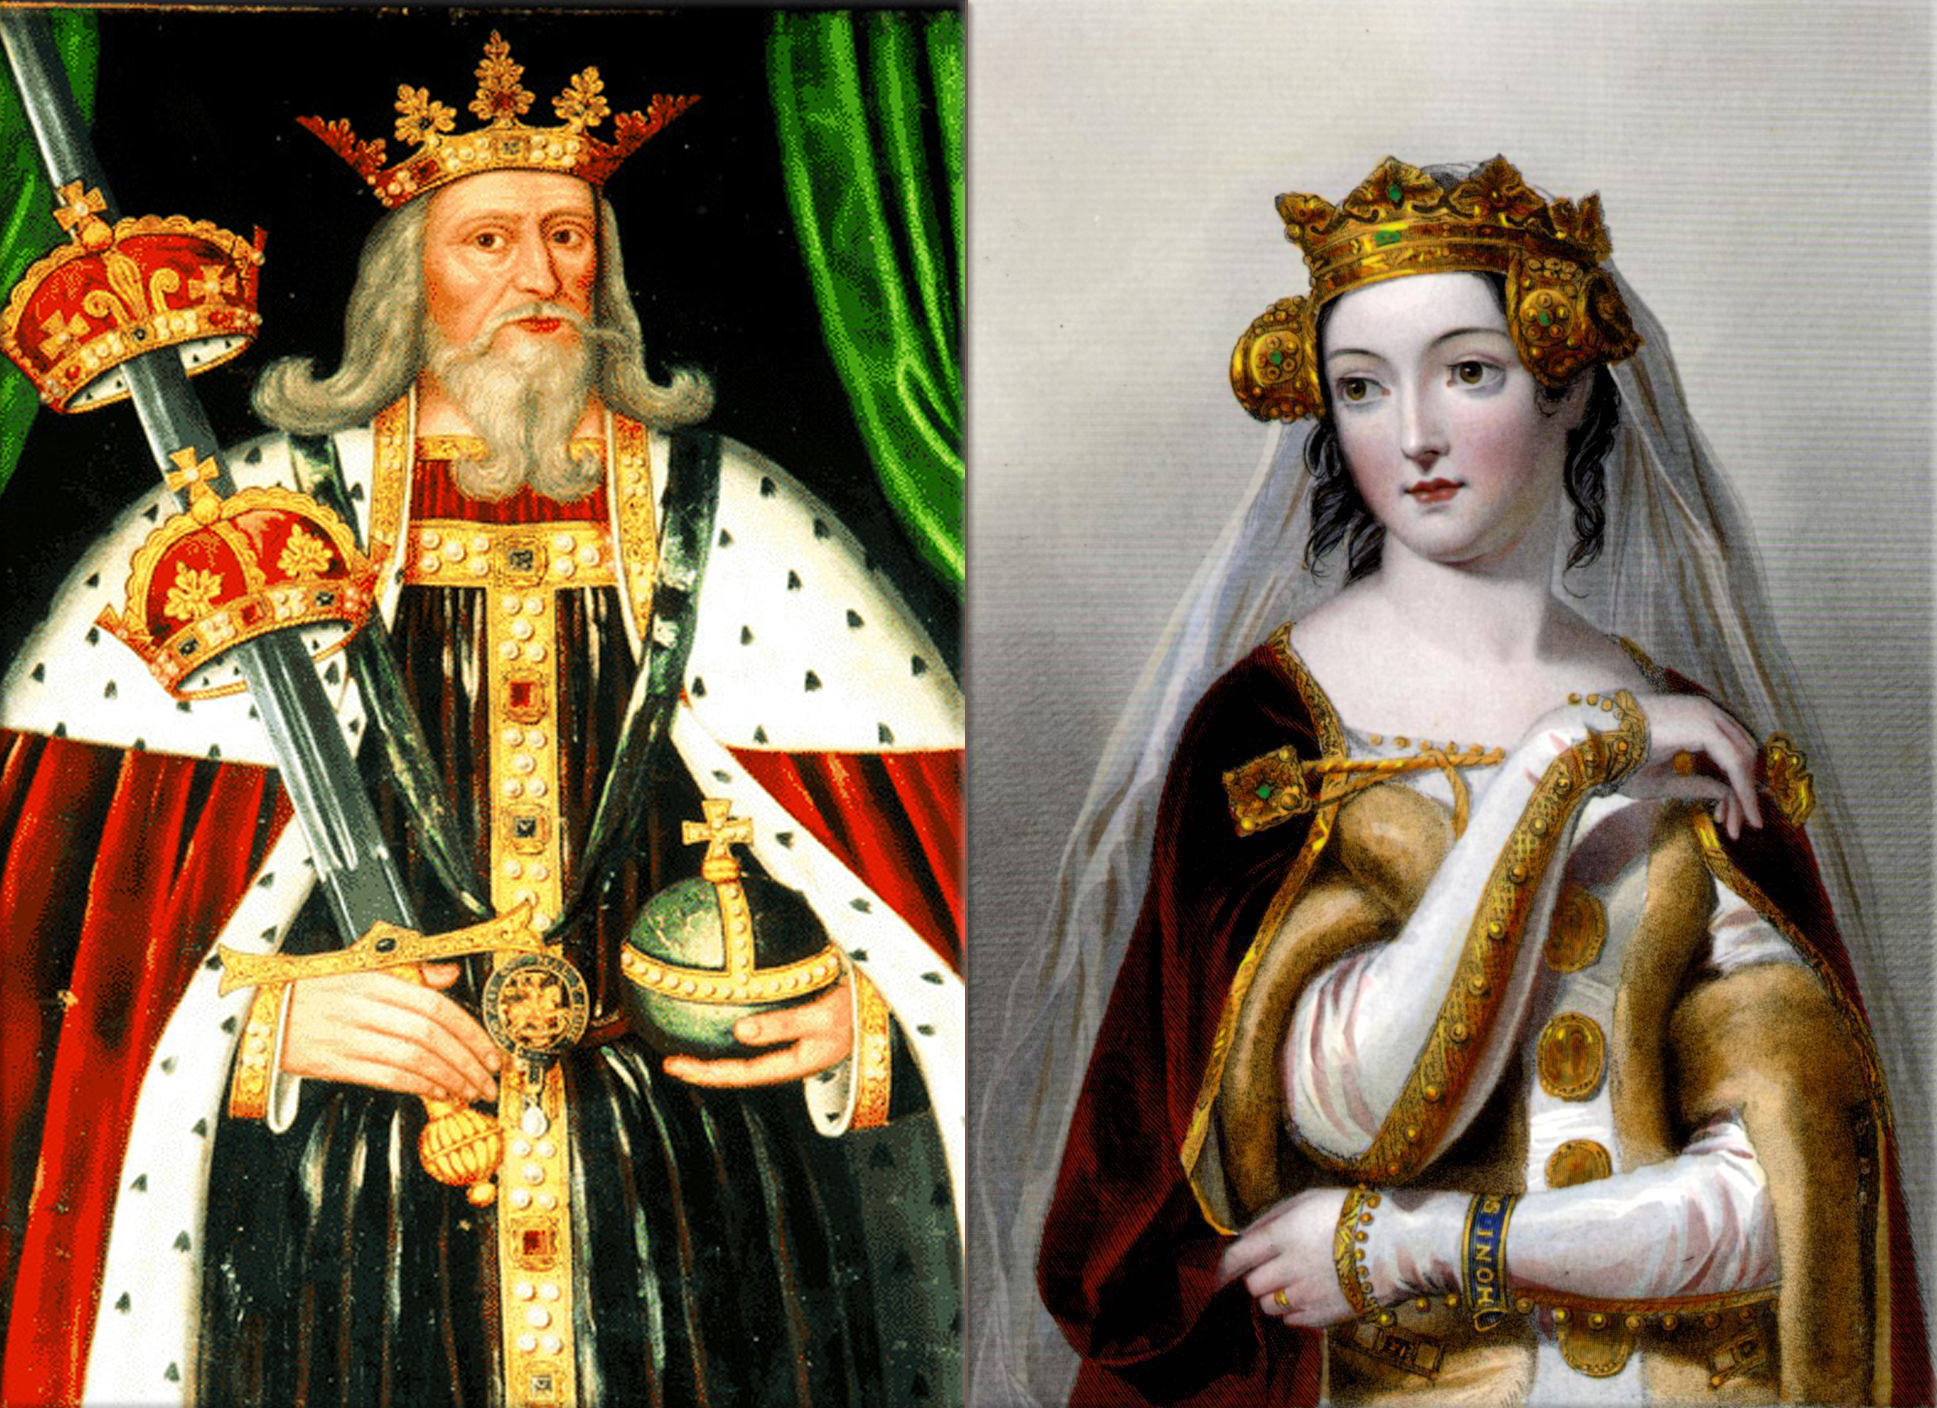 Edward III of England marries Philippa of Hainault